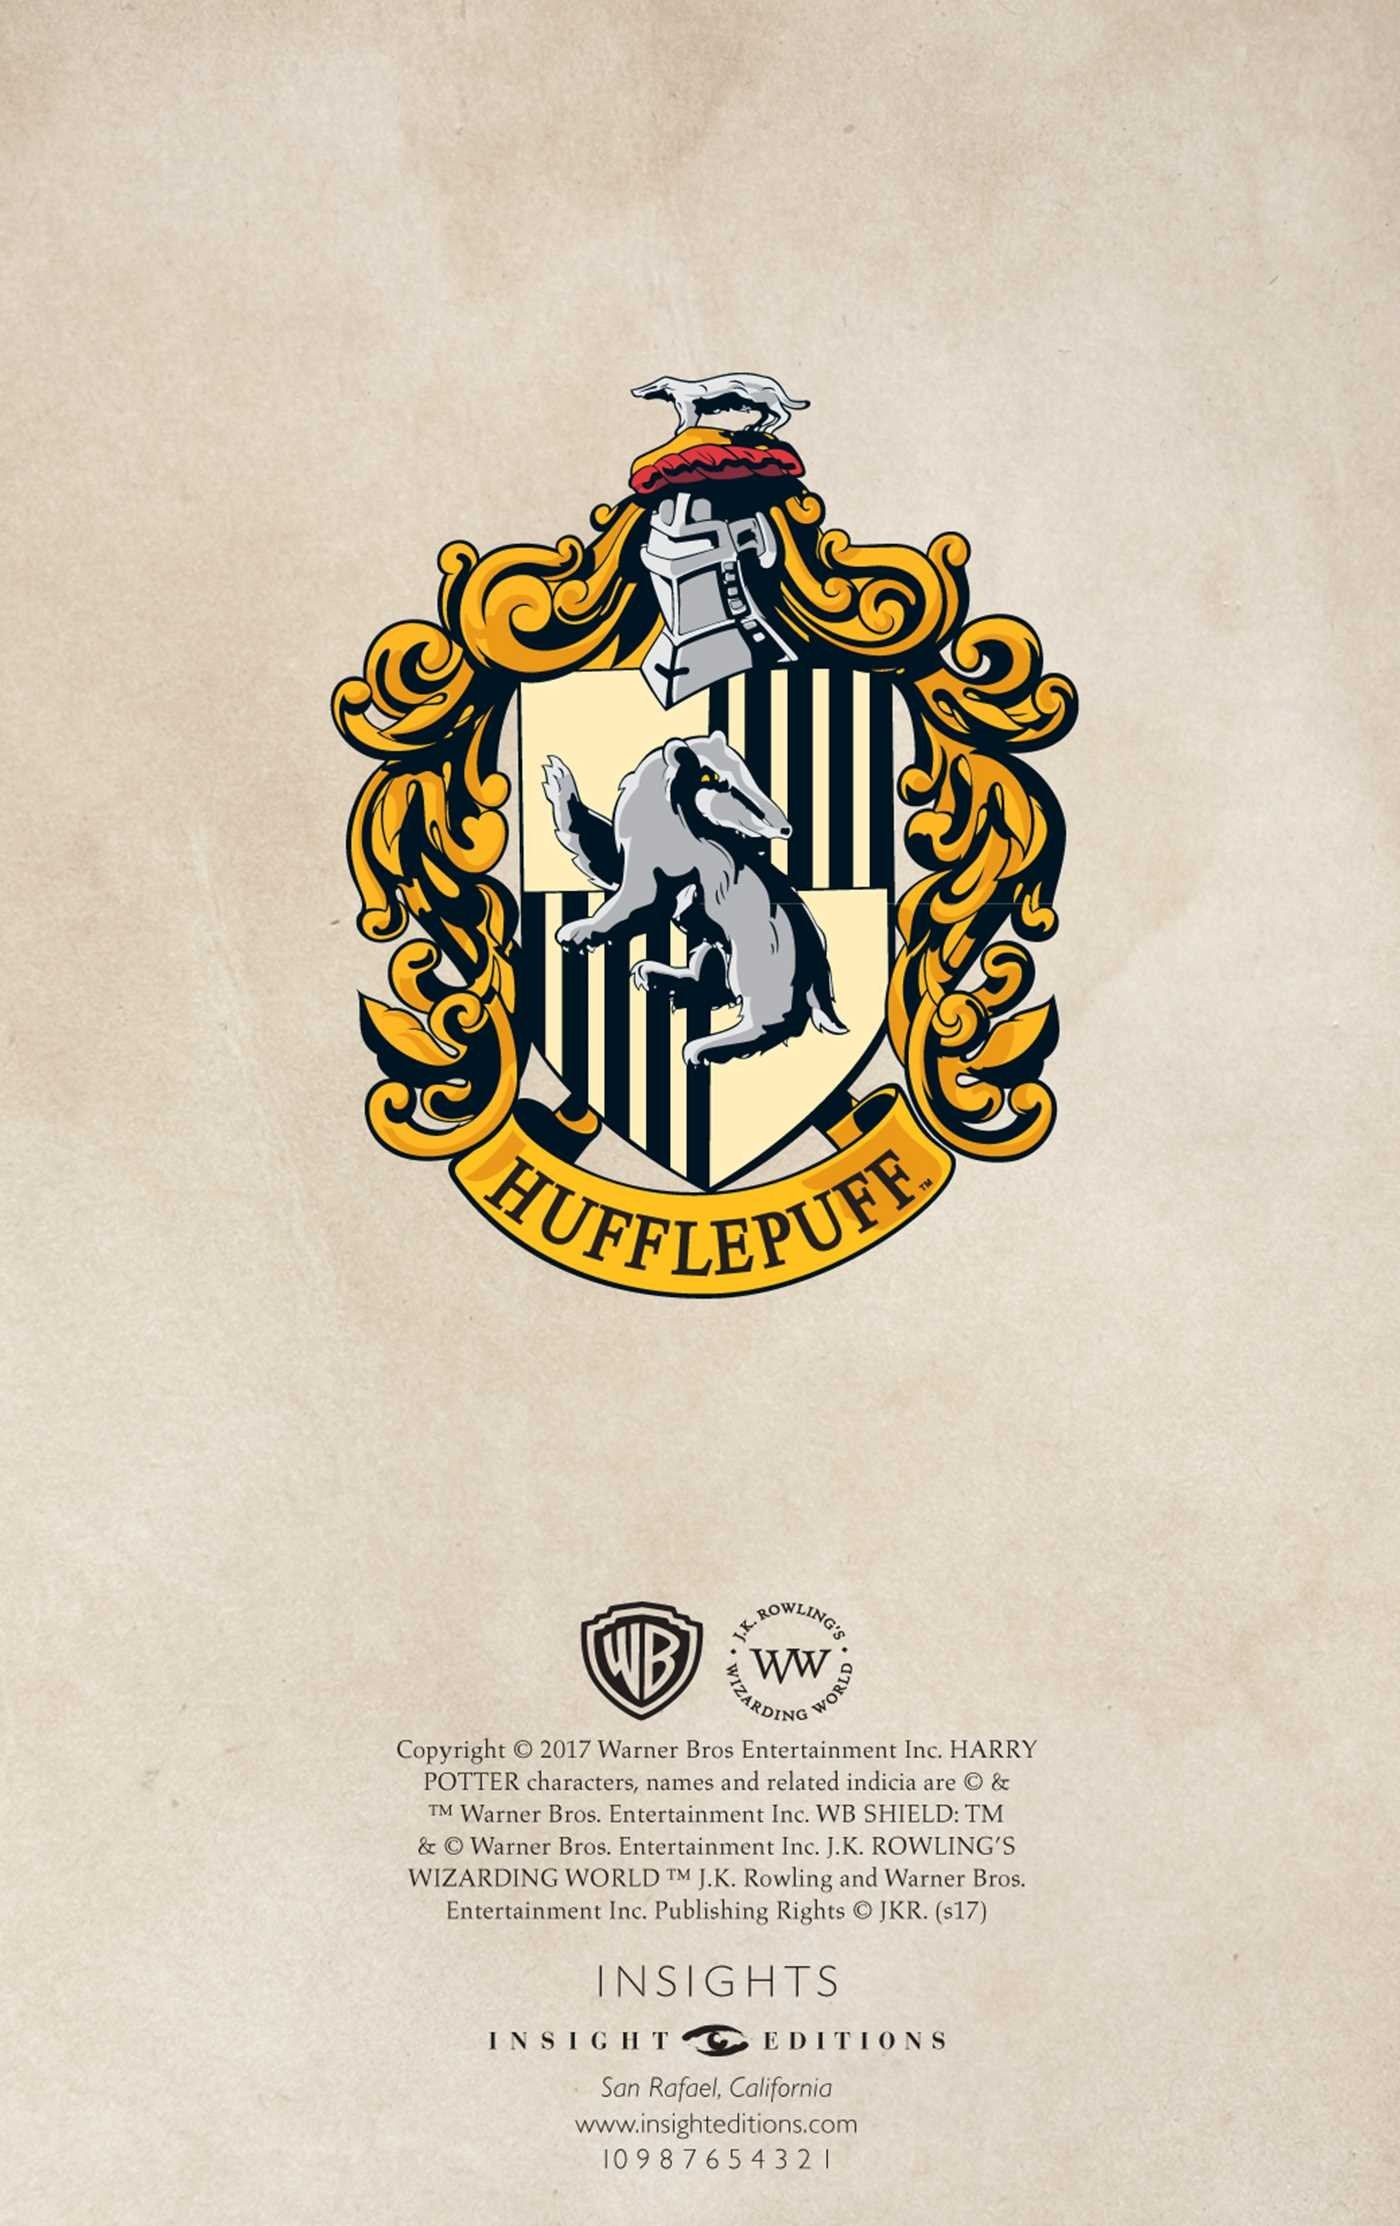 Harry Potter: Hufflepuff Pocket Journal